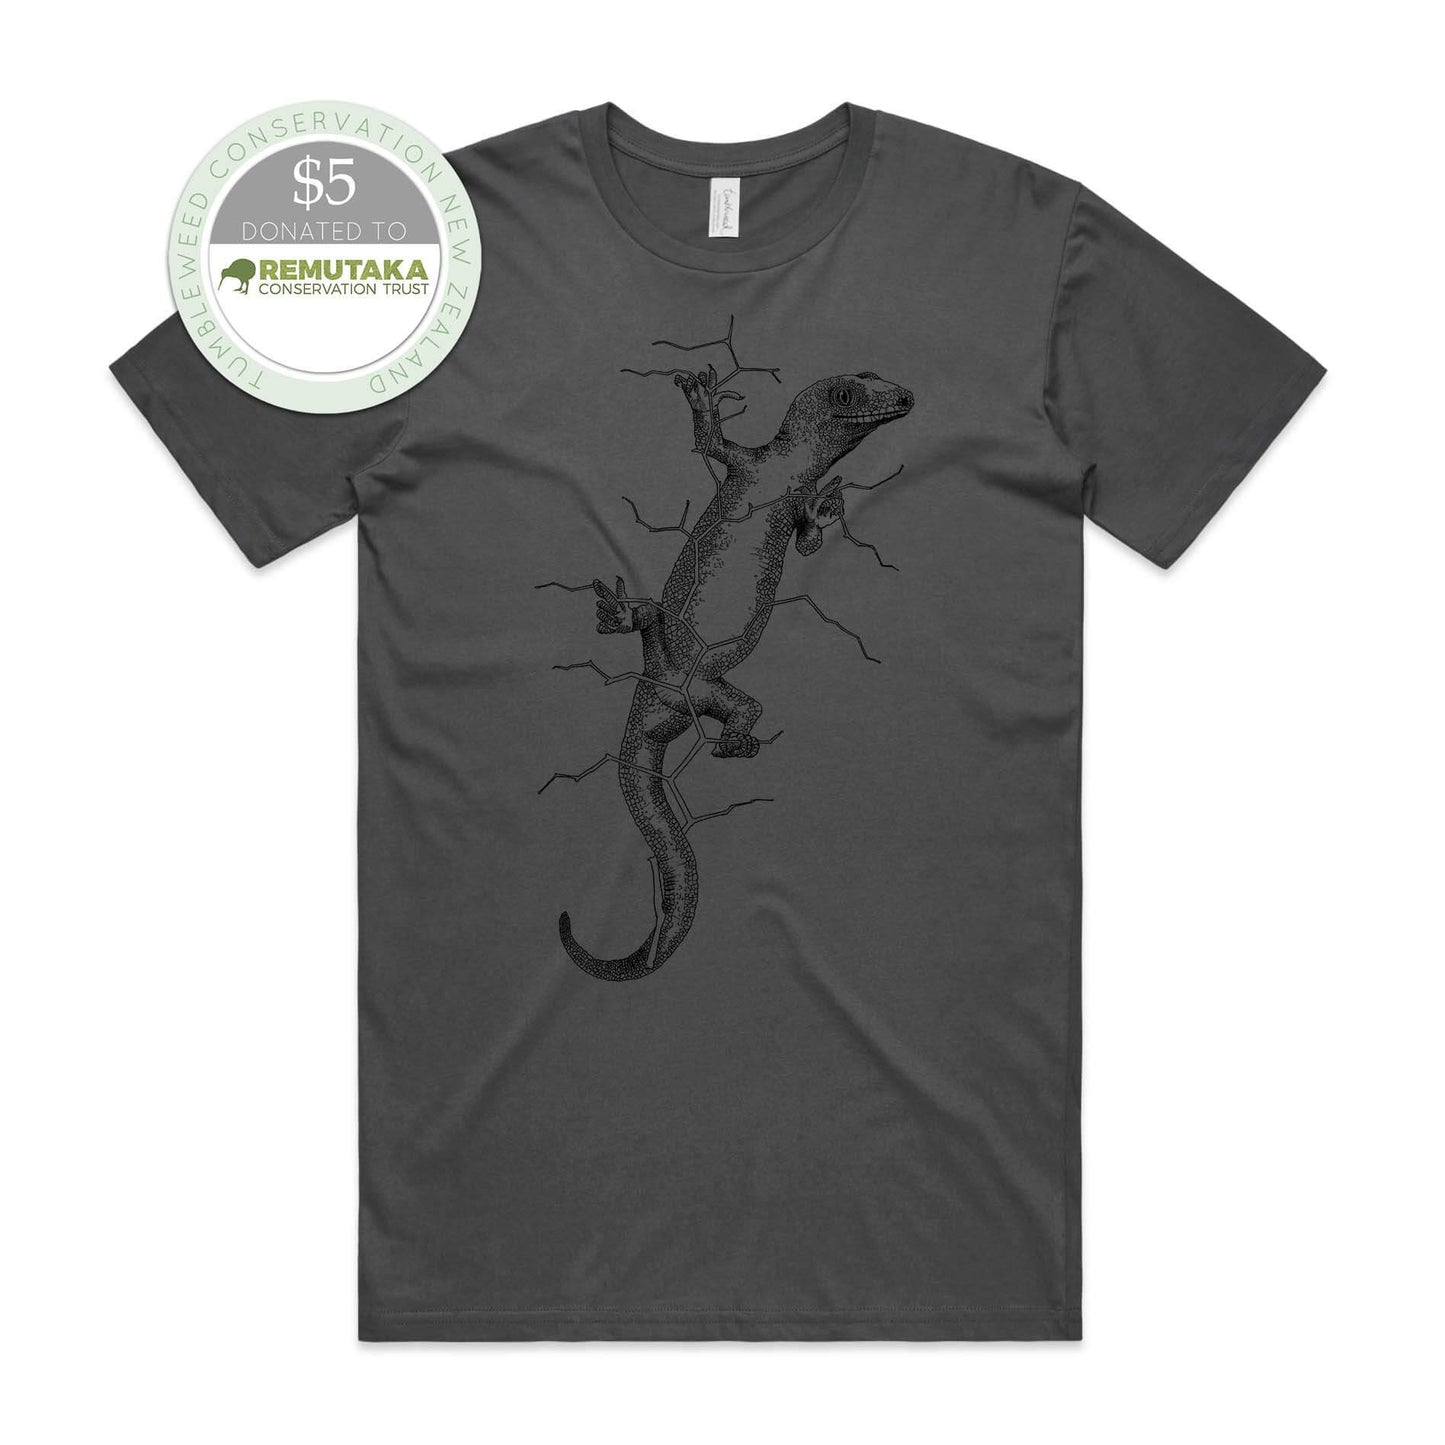 White, female t-shirt featuring a screen printed gecko design.